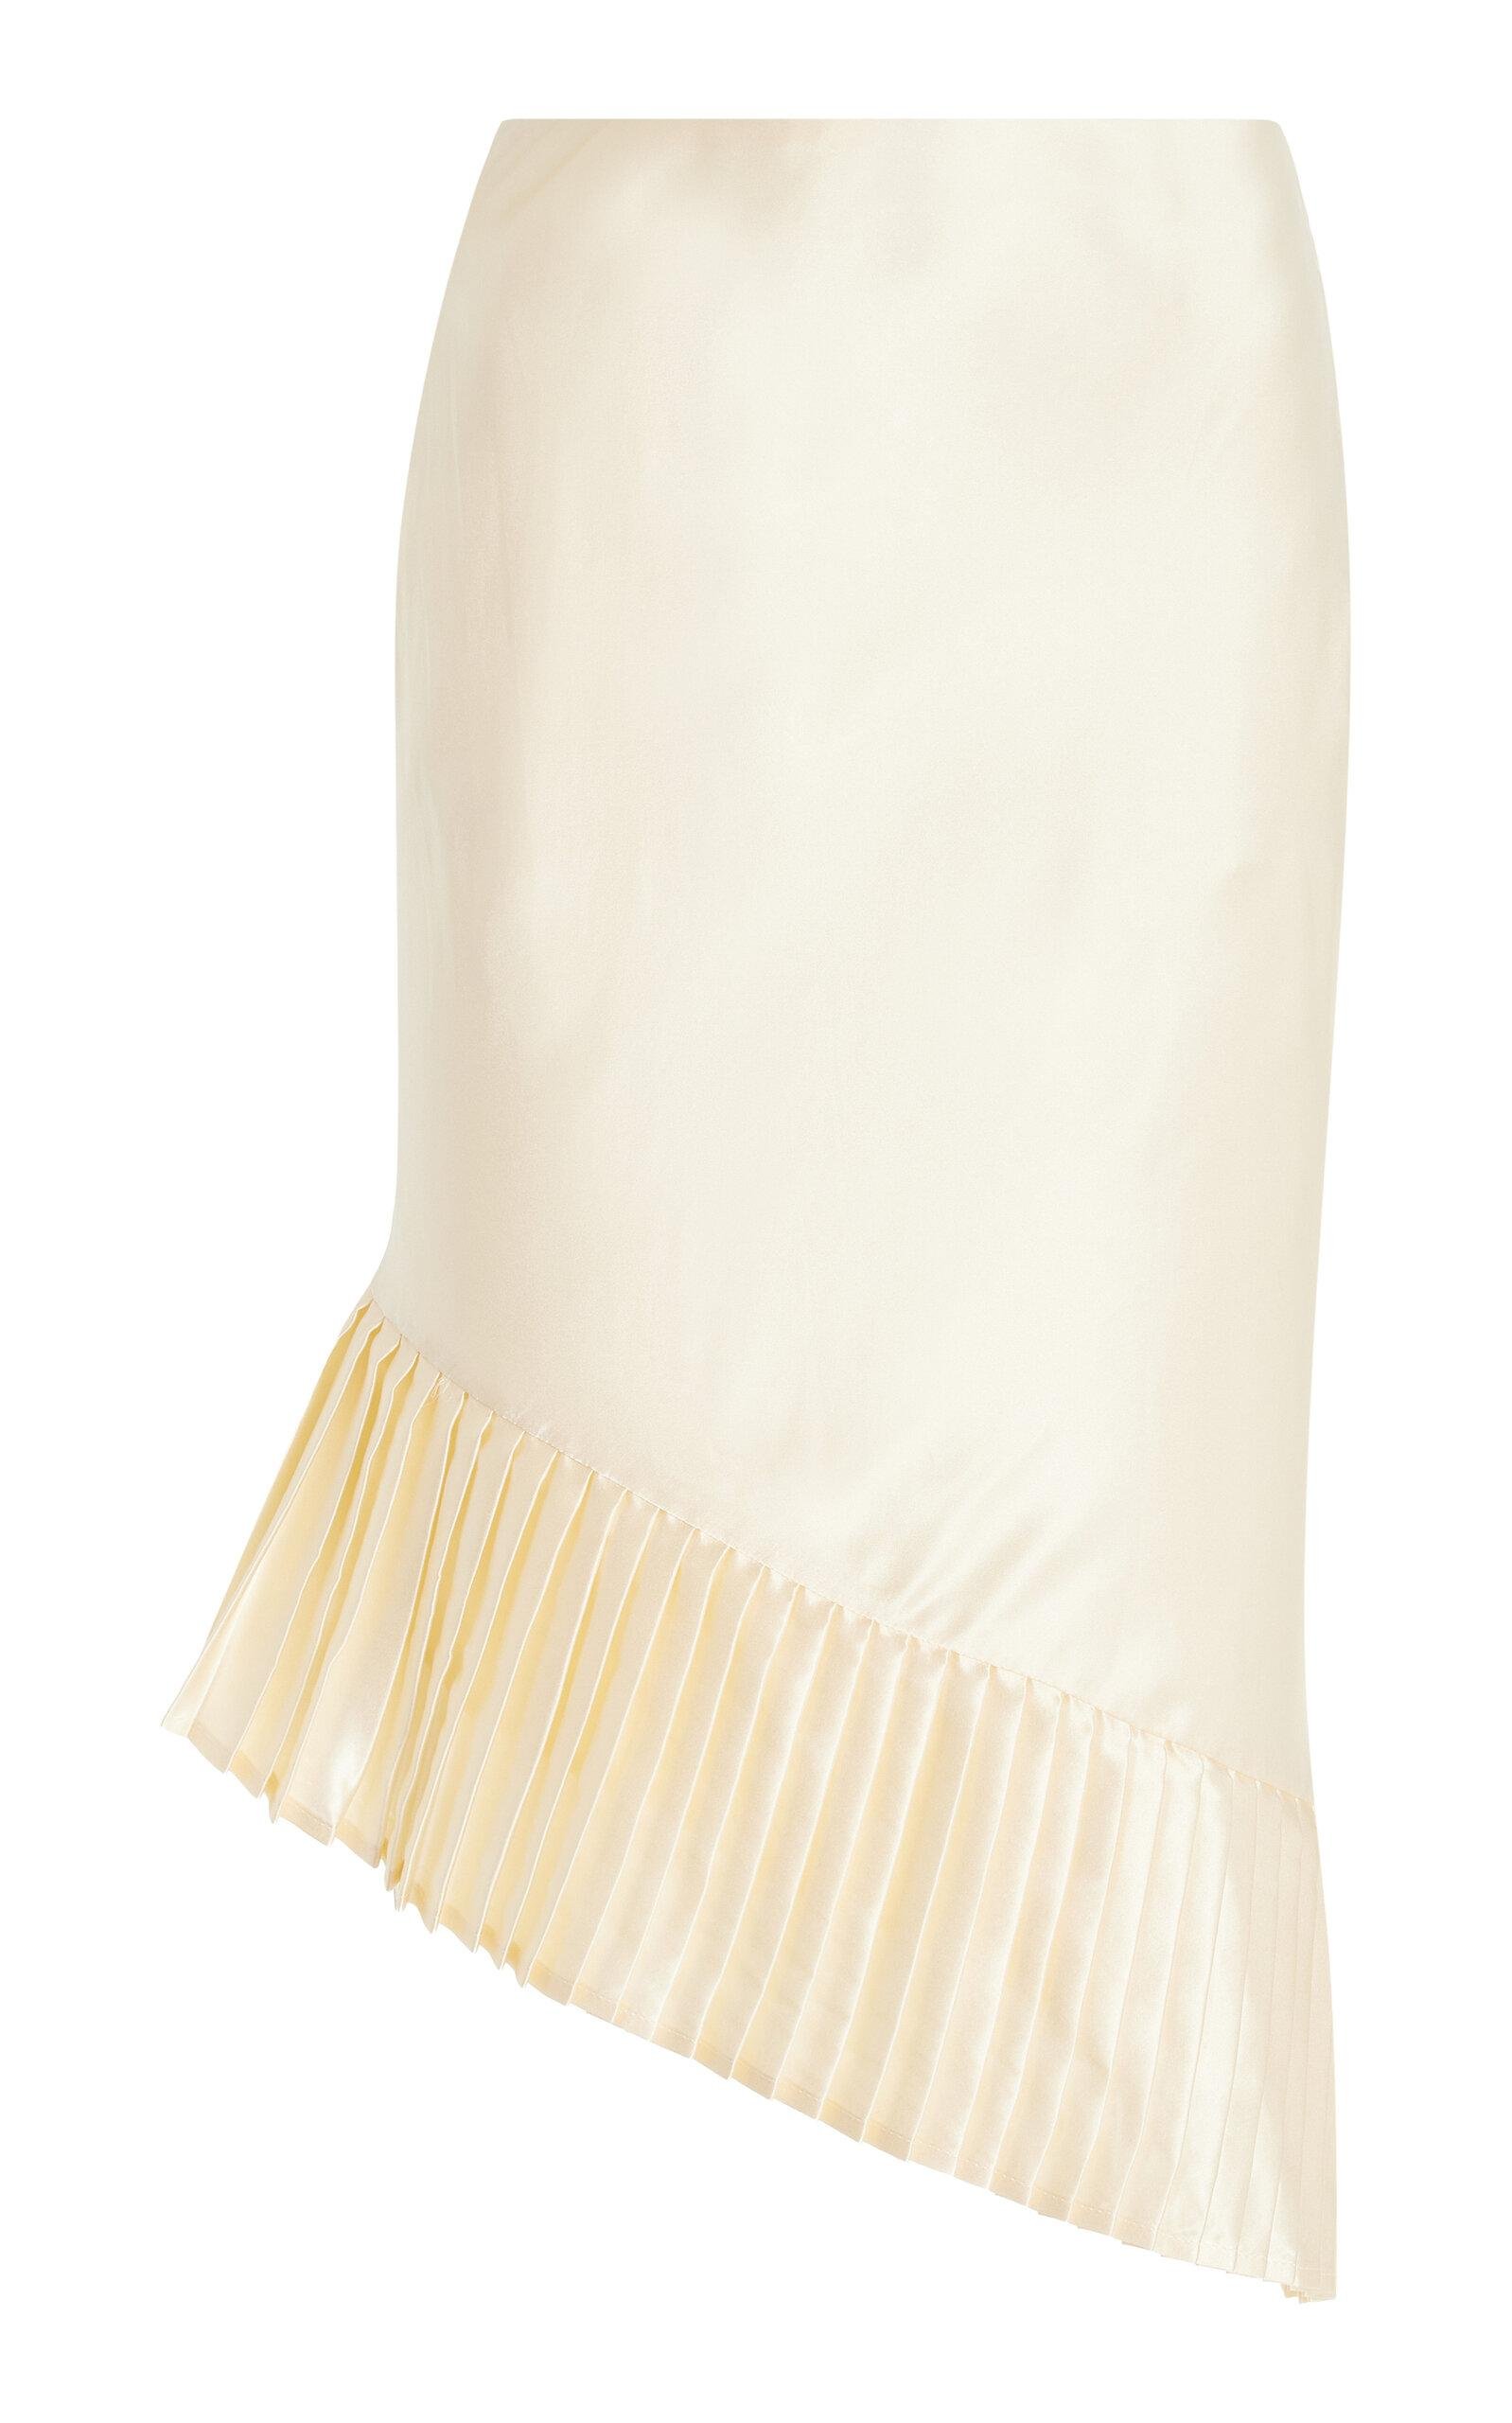 FAIT PAR FOUTCH - Annabelle Hand-Pleated Silk Charmeuse Midi Skirt - Ivory - S - Only At Moda Operandi by FAIT PAR FOUTCH